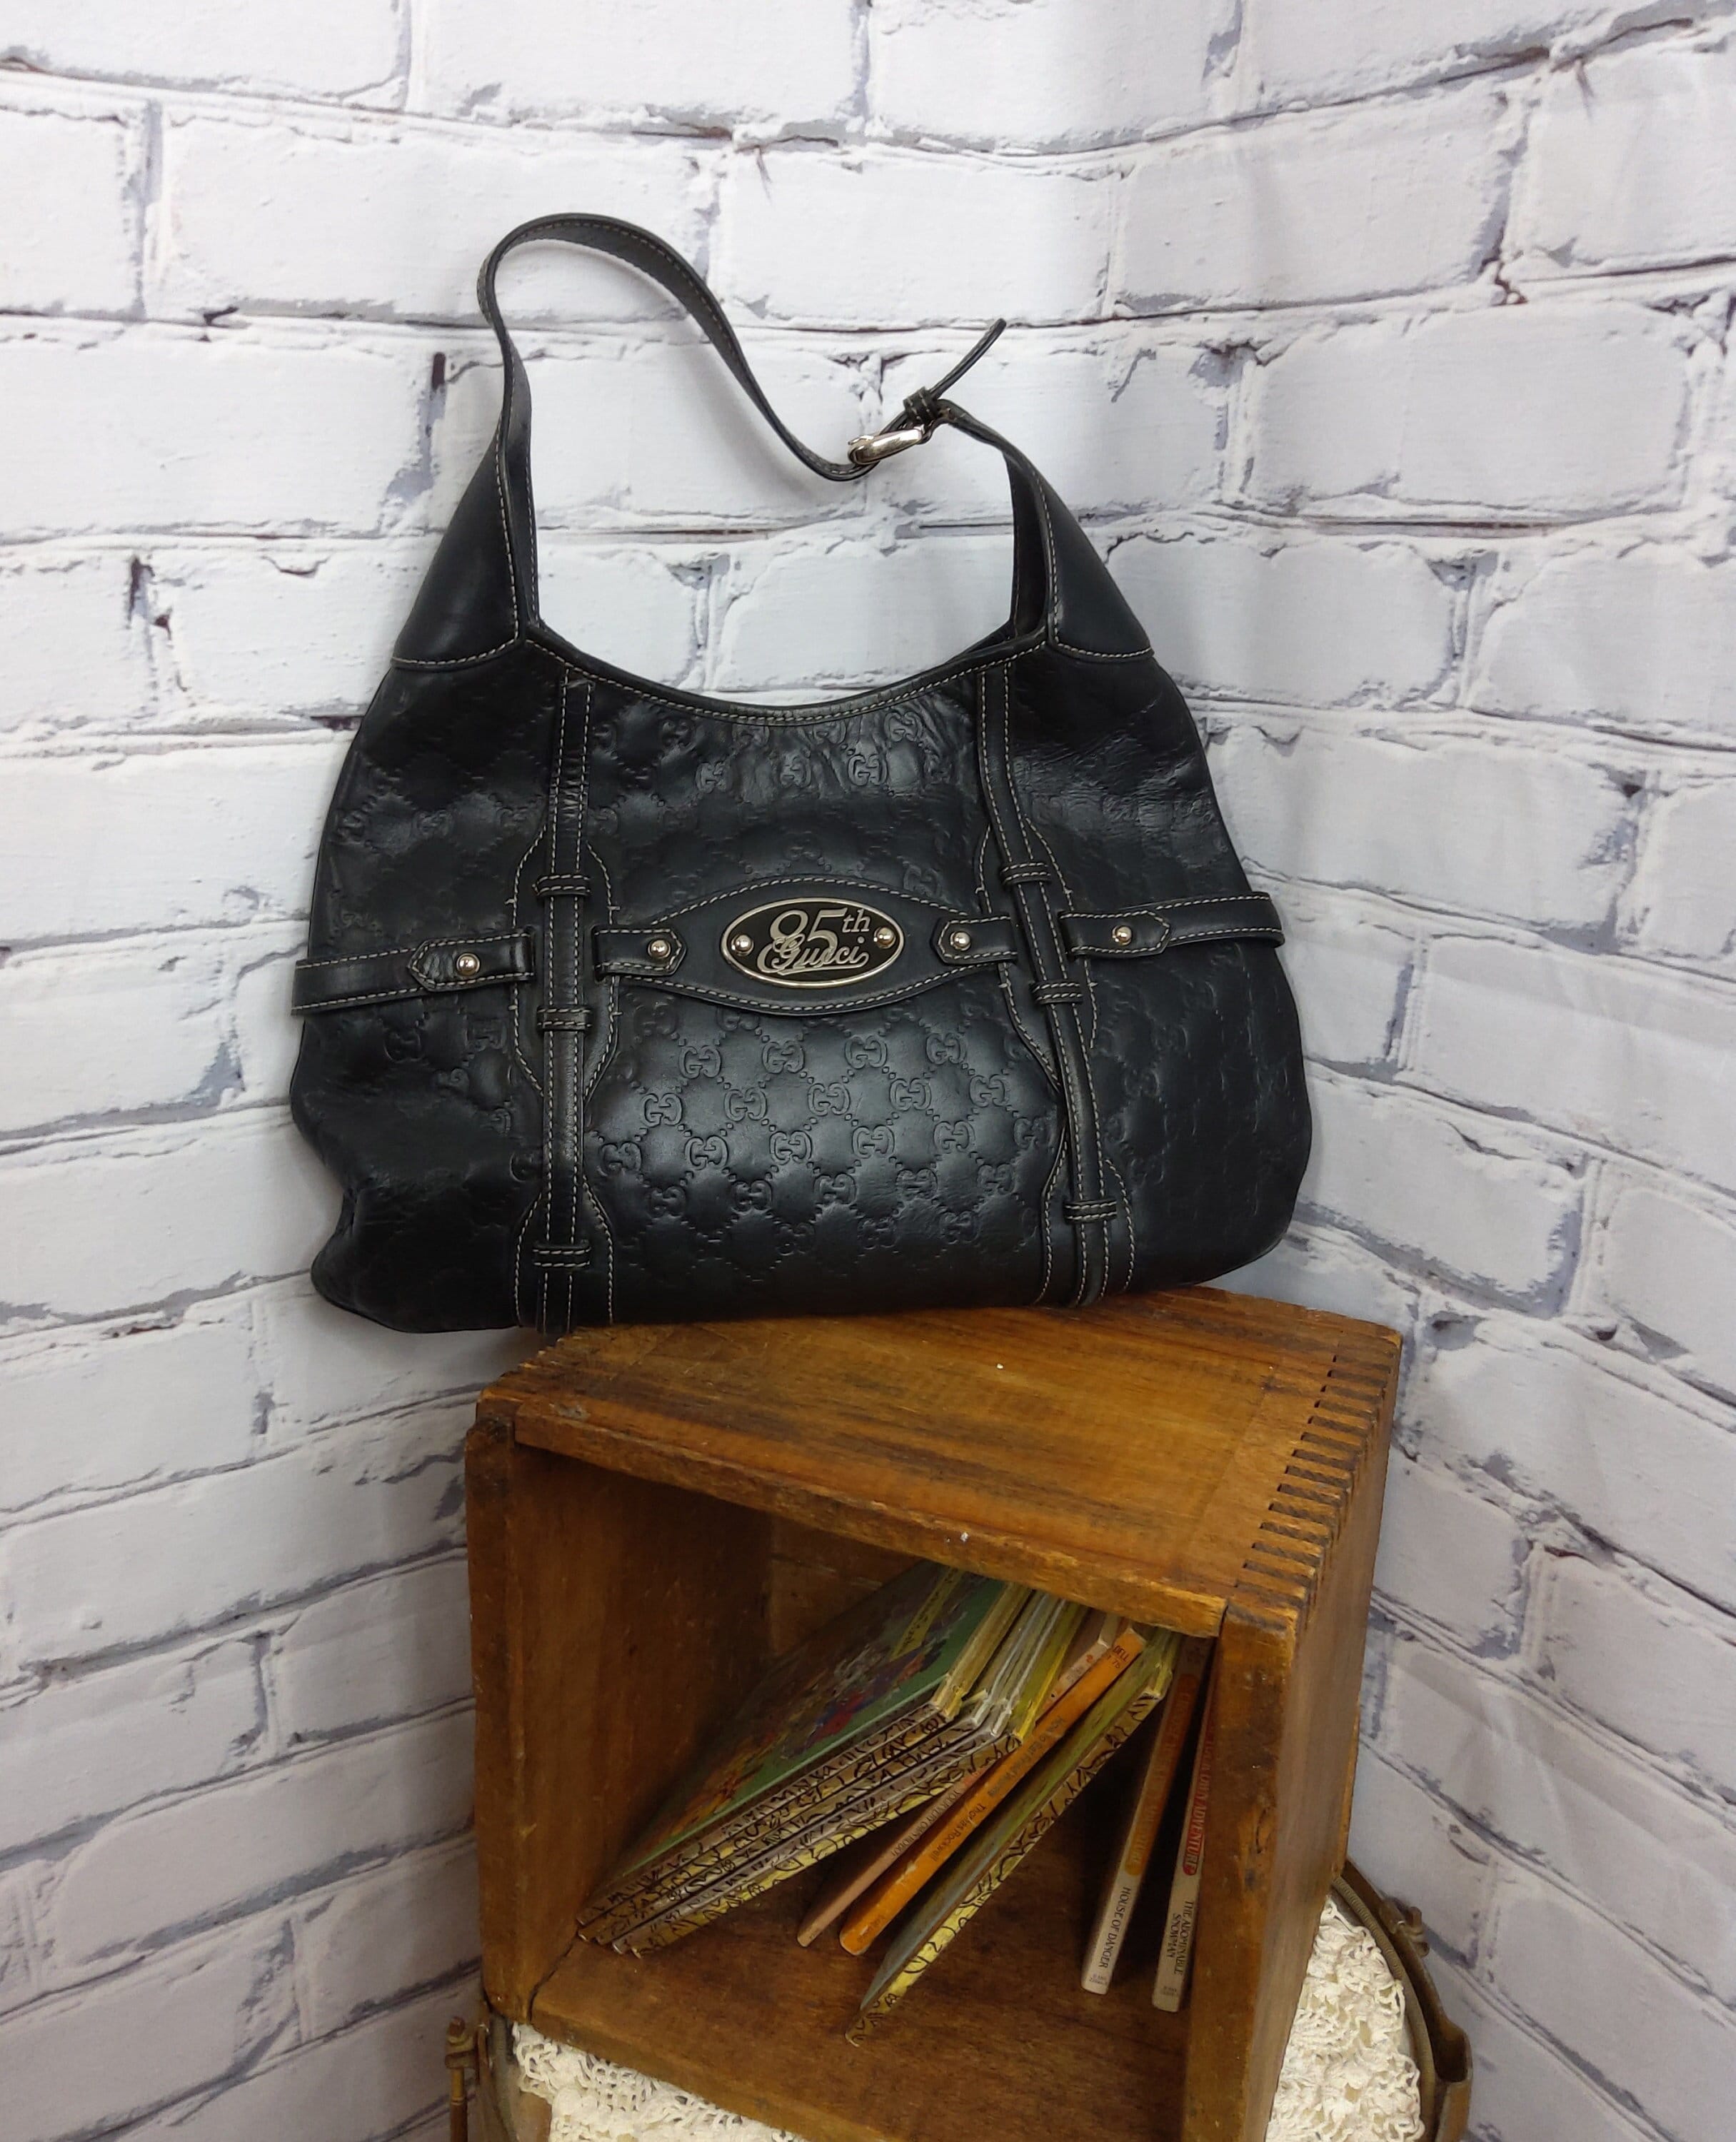 Gucci 85th Anniversary Limited Edition Horsebit Hobo Bag Handbag NICE Very  RARE!